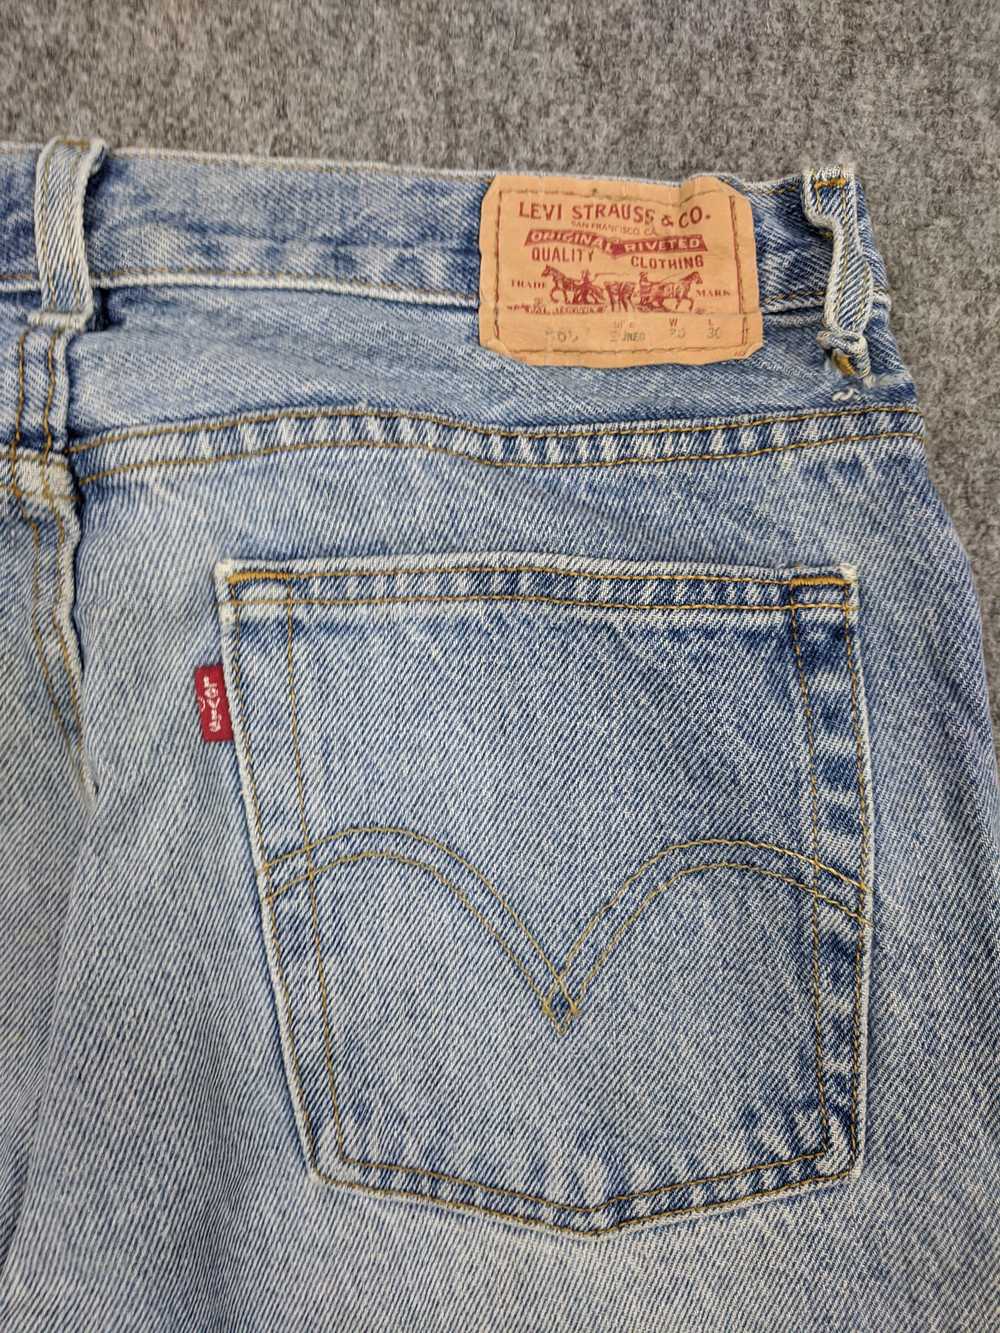 Vintage - Vintage Levis 569 Jeans - image 12